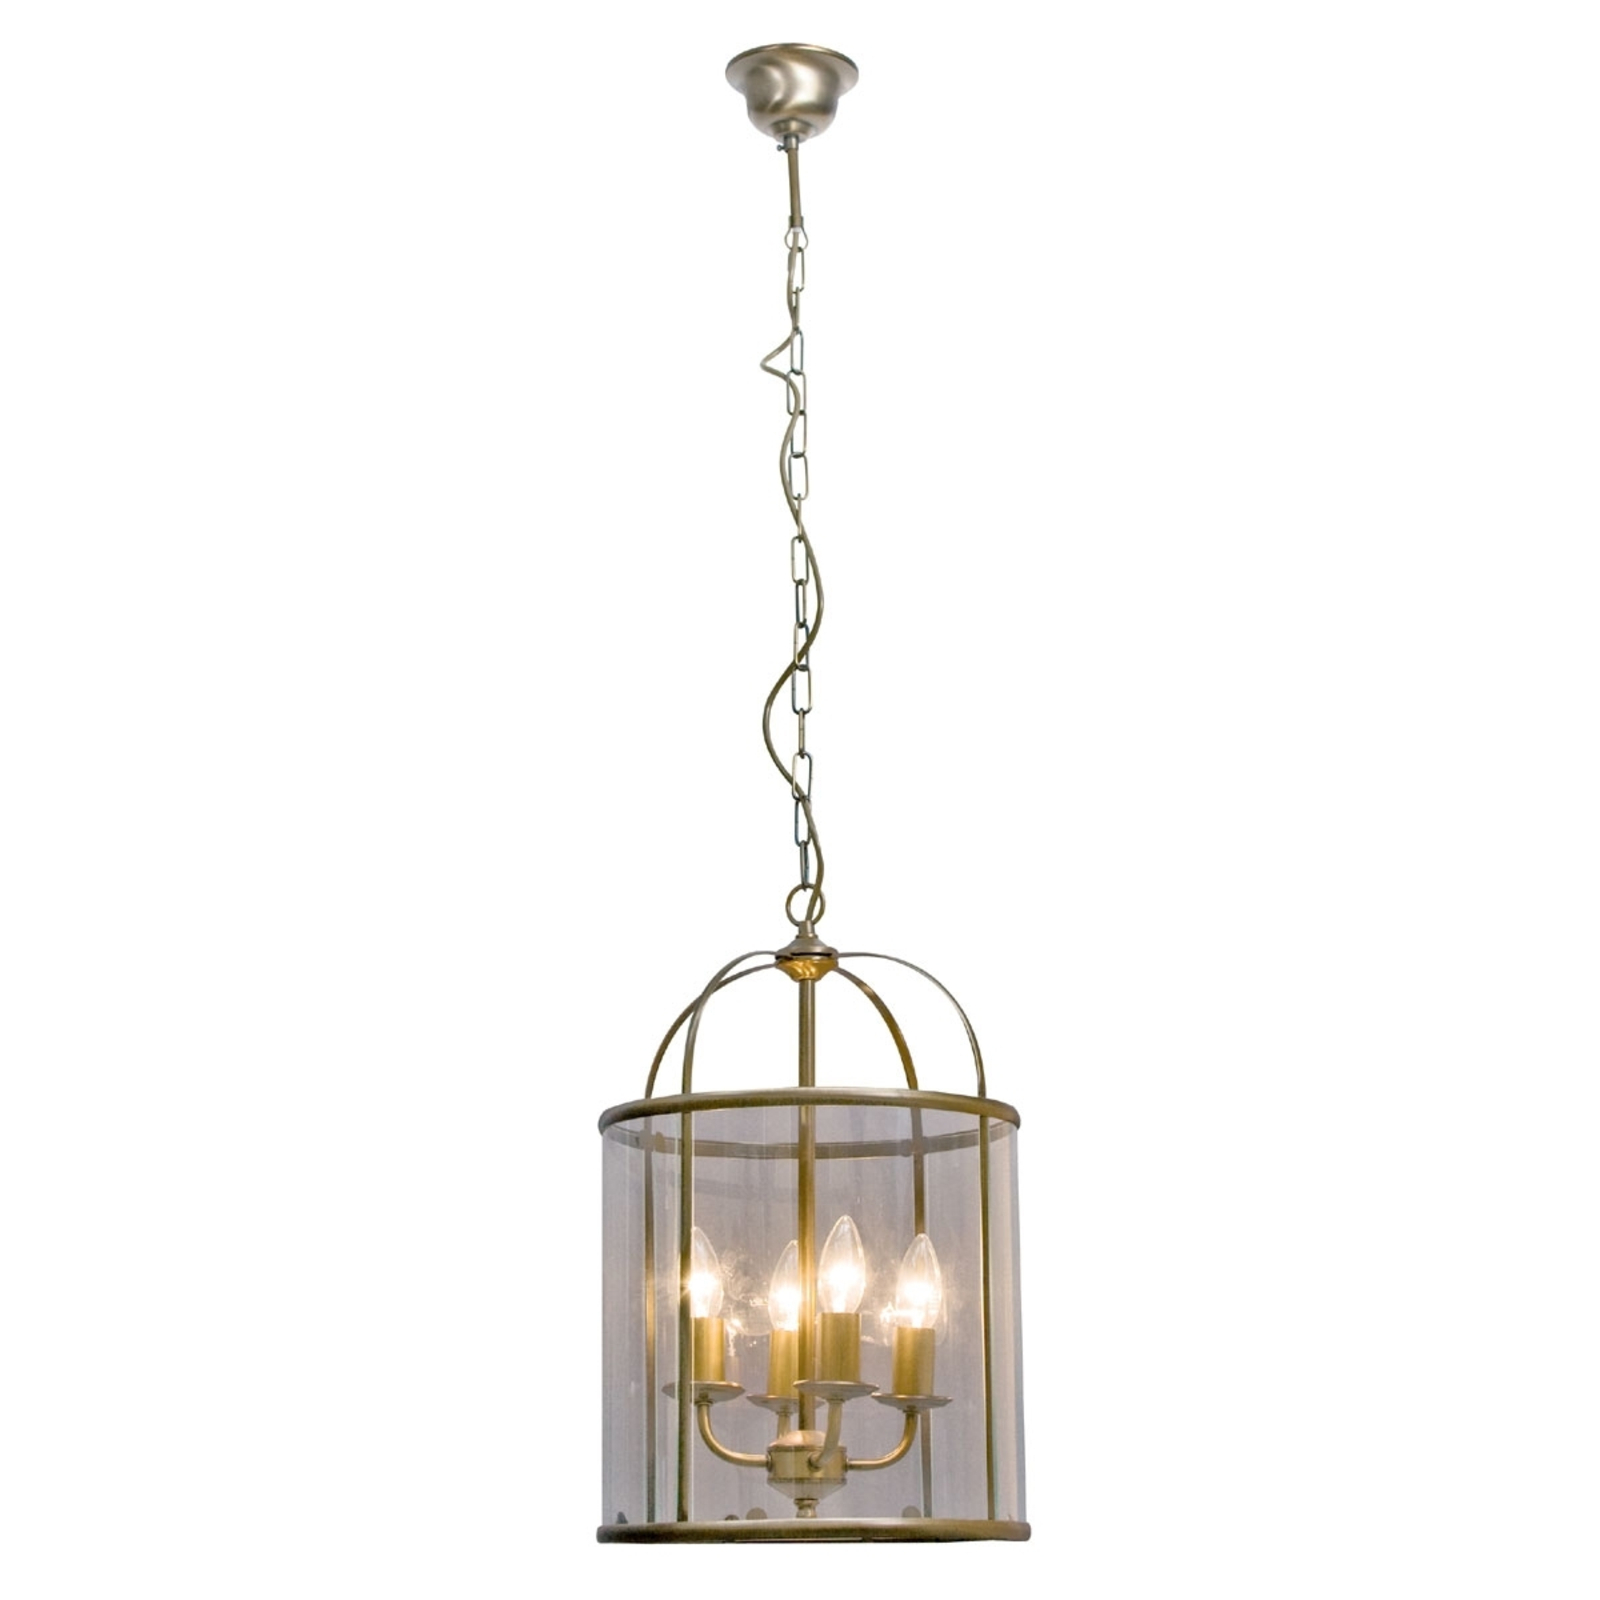 Decorative Pimpernel hanging light 32 cm